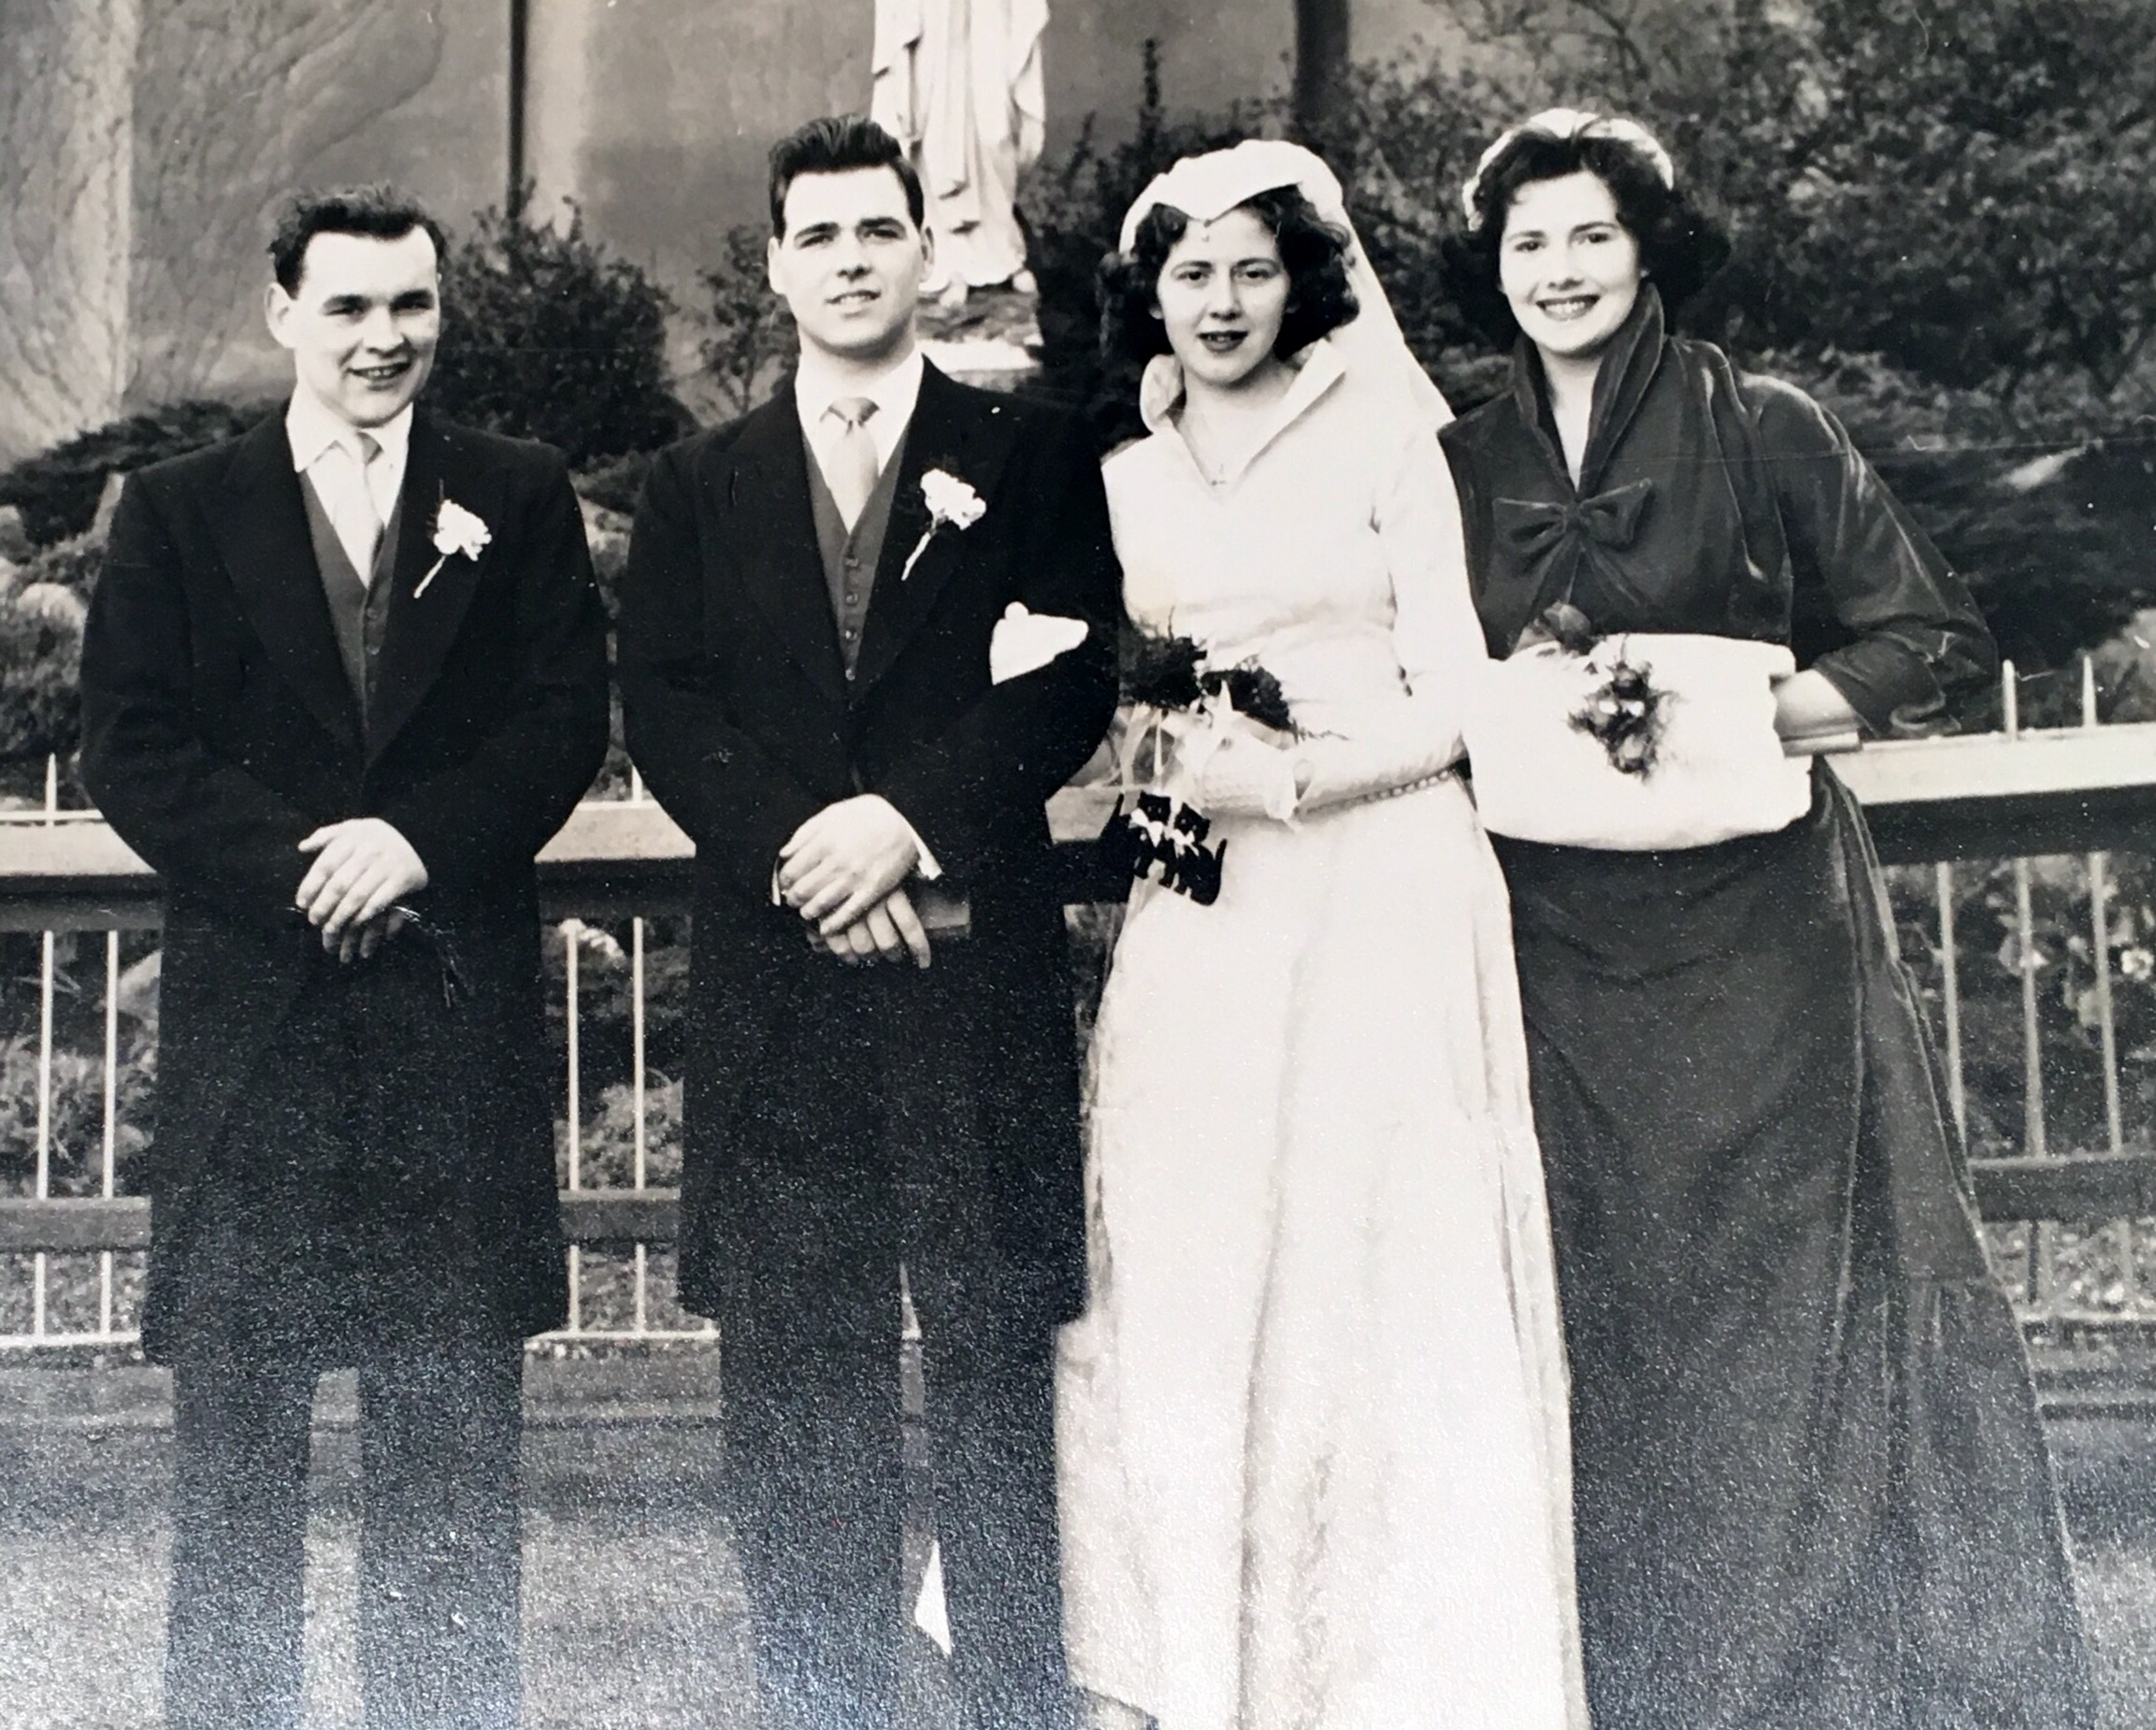 Owen & Joan's wedding day, Dublin 1957.  Still enjoying their life in 2017.  Diamond anniversary at the end of January 